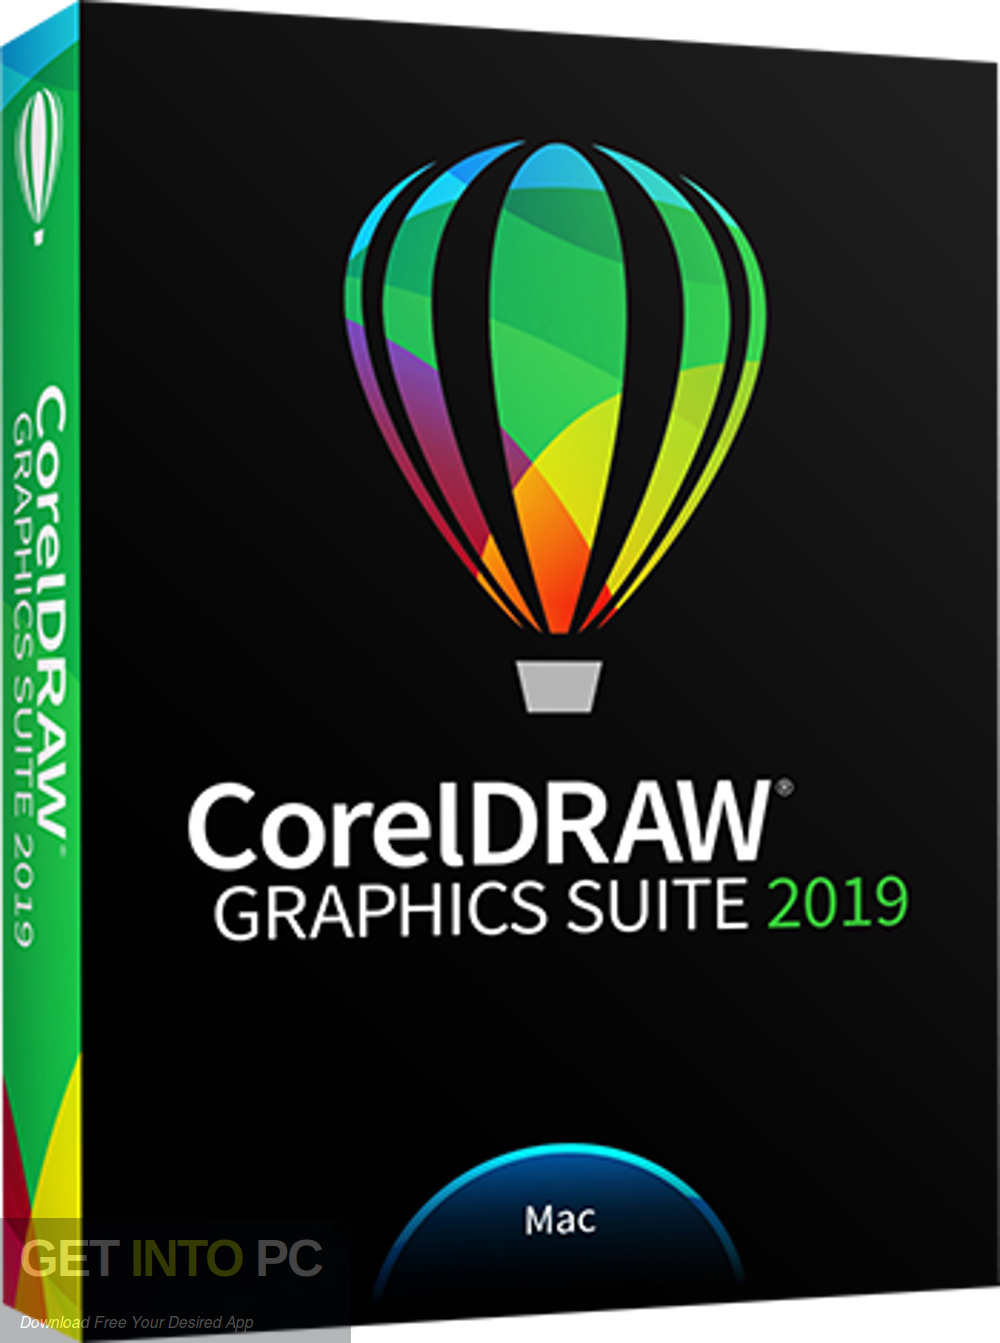 CorelDRAW Graphics Suite 2019 for Mac Free Download-GetintoPC.com